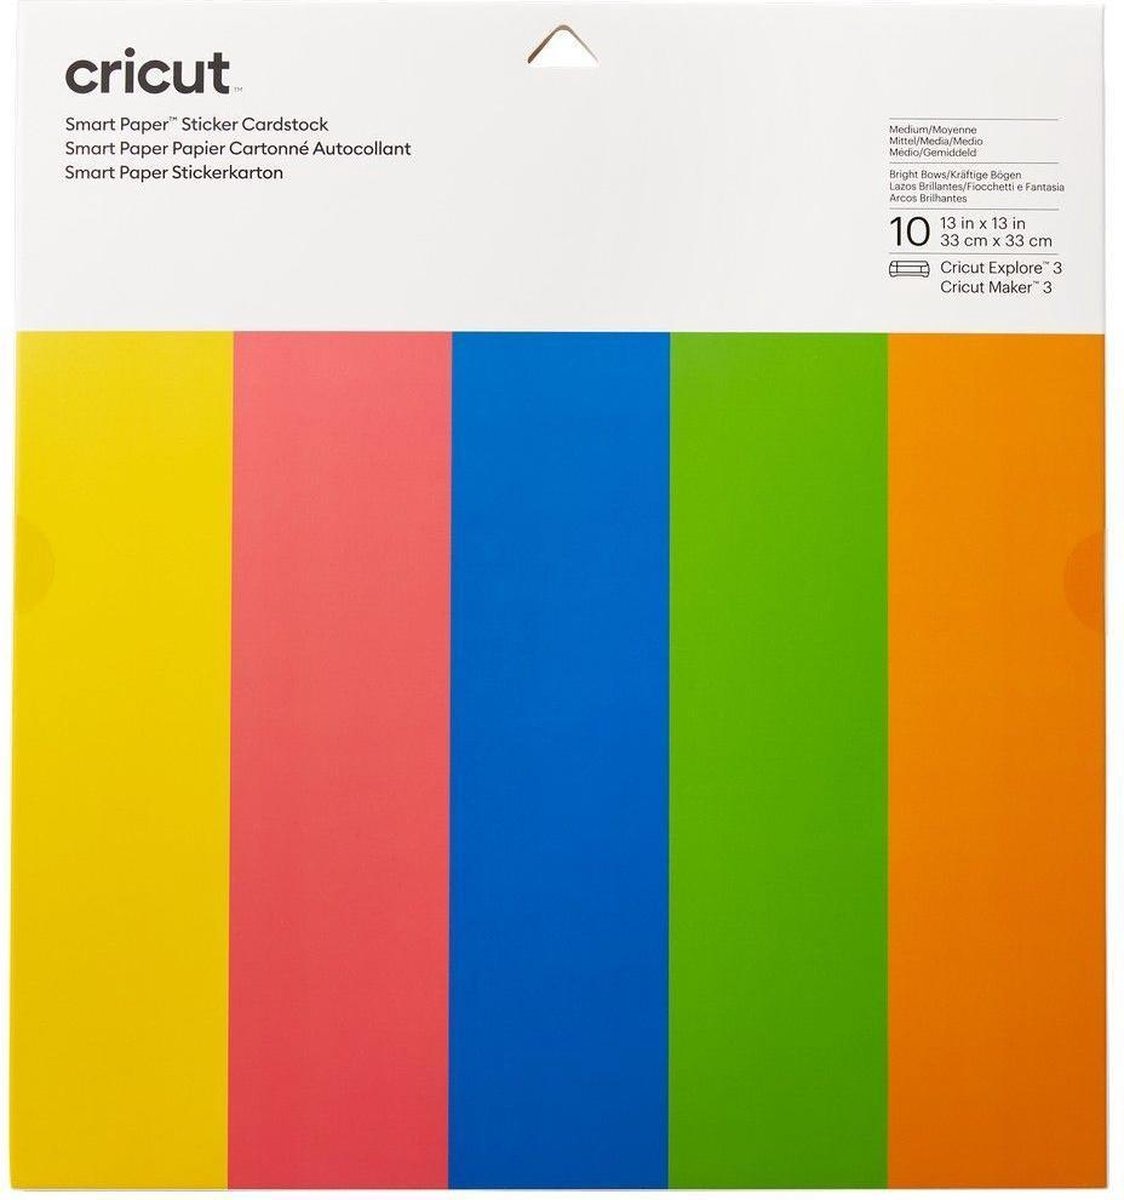 Cricut Smart Sticker Cardstock 33x33cm 10 sheets (Brilliant Bows)